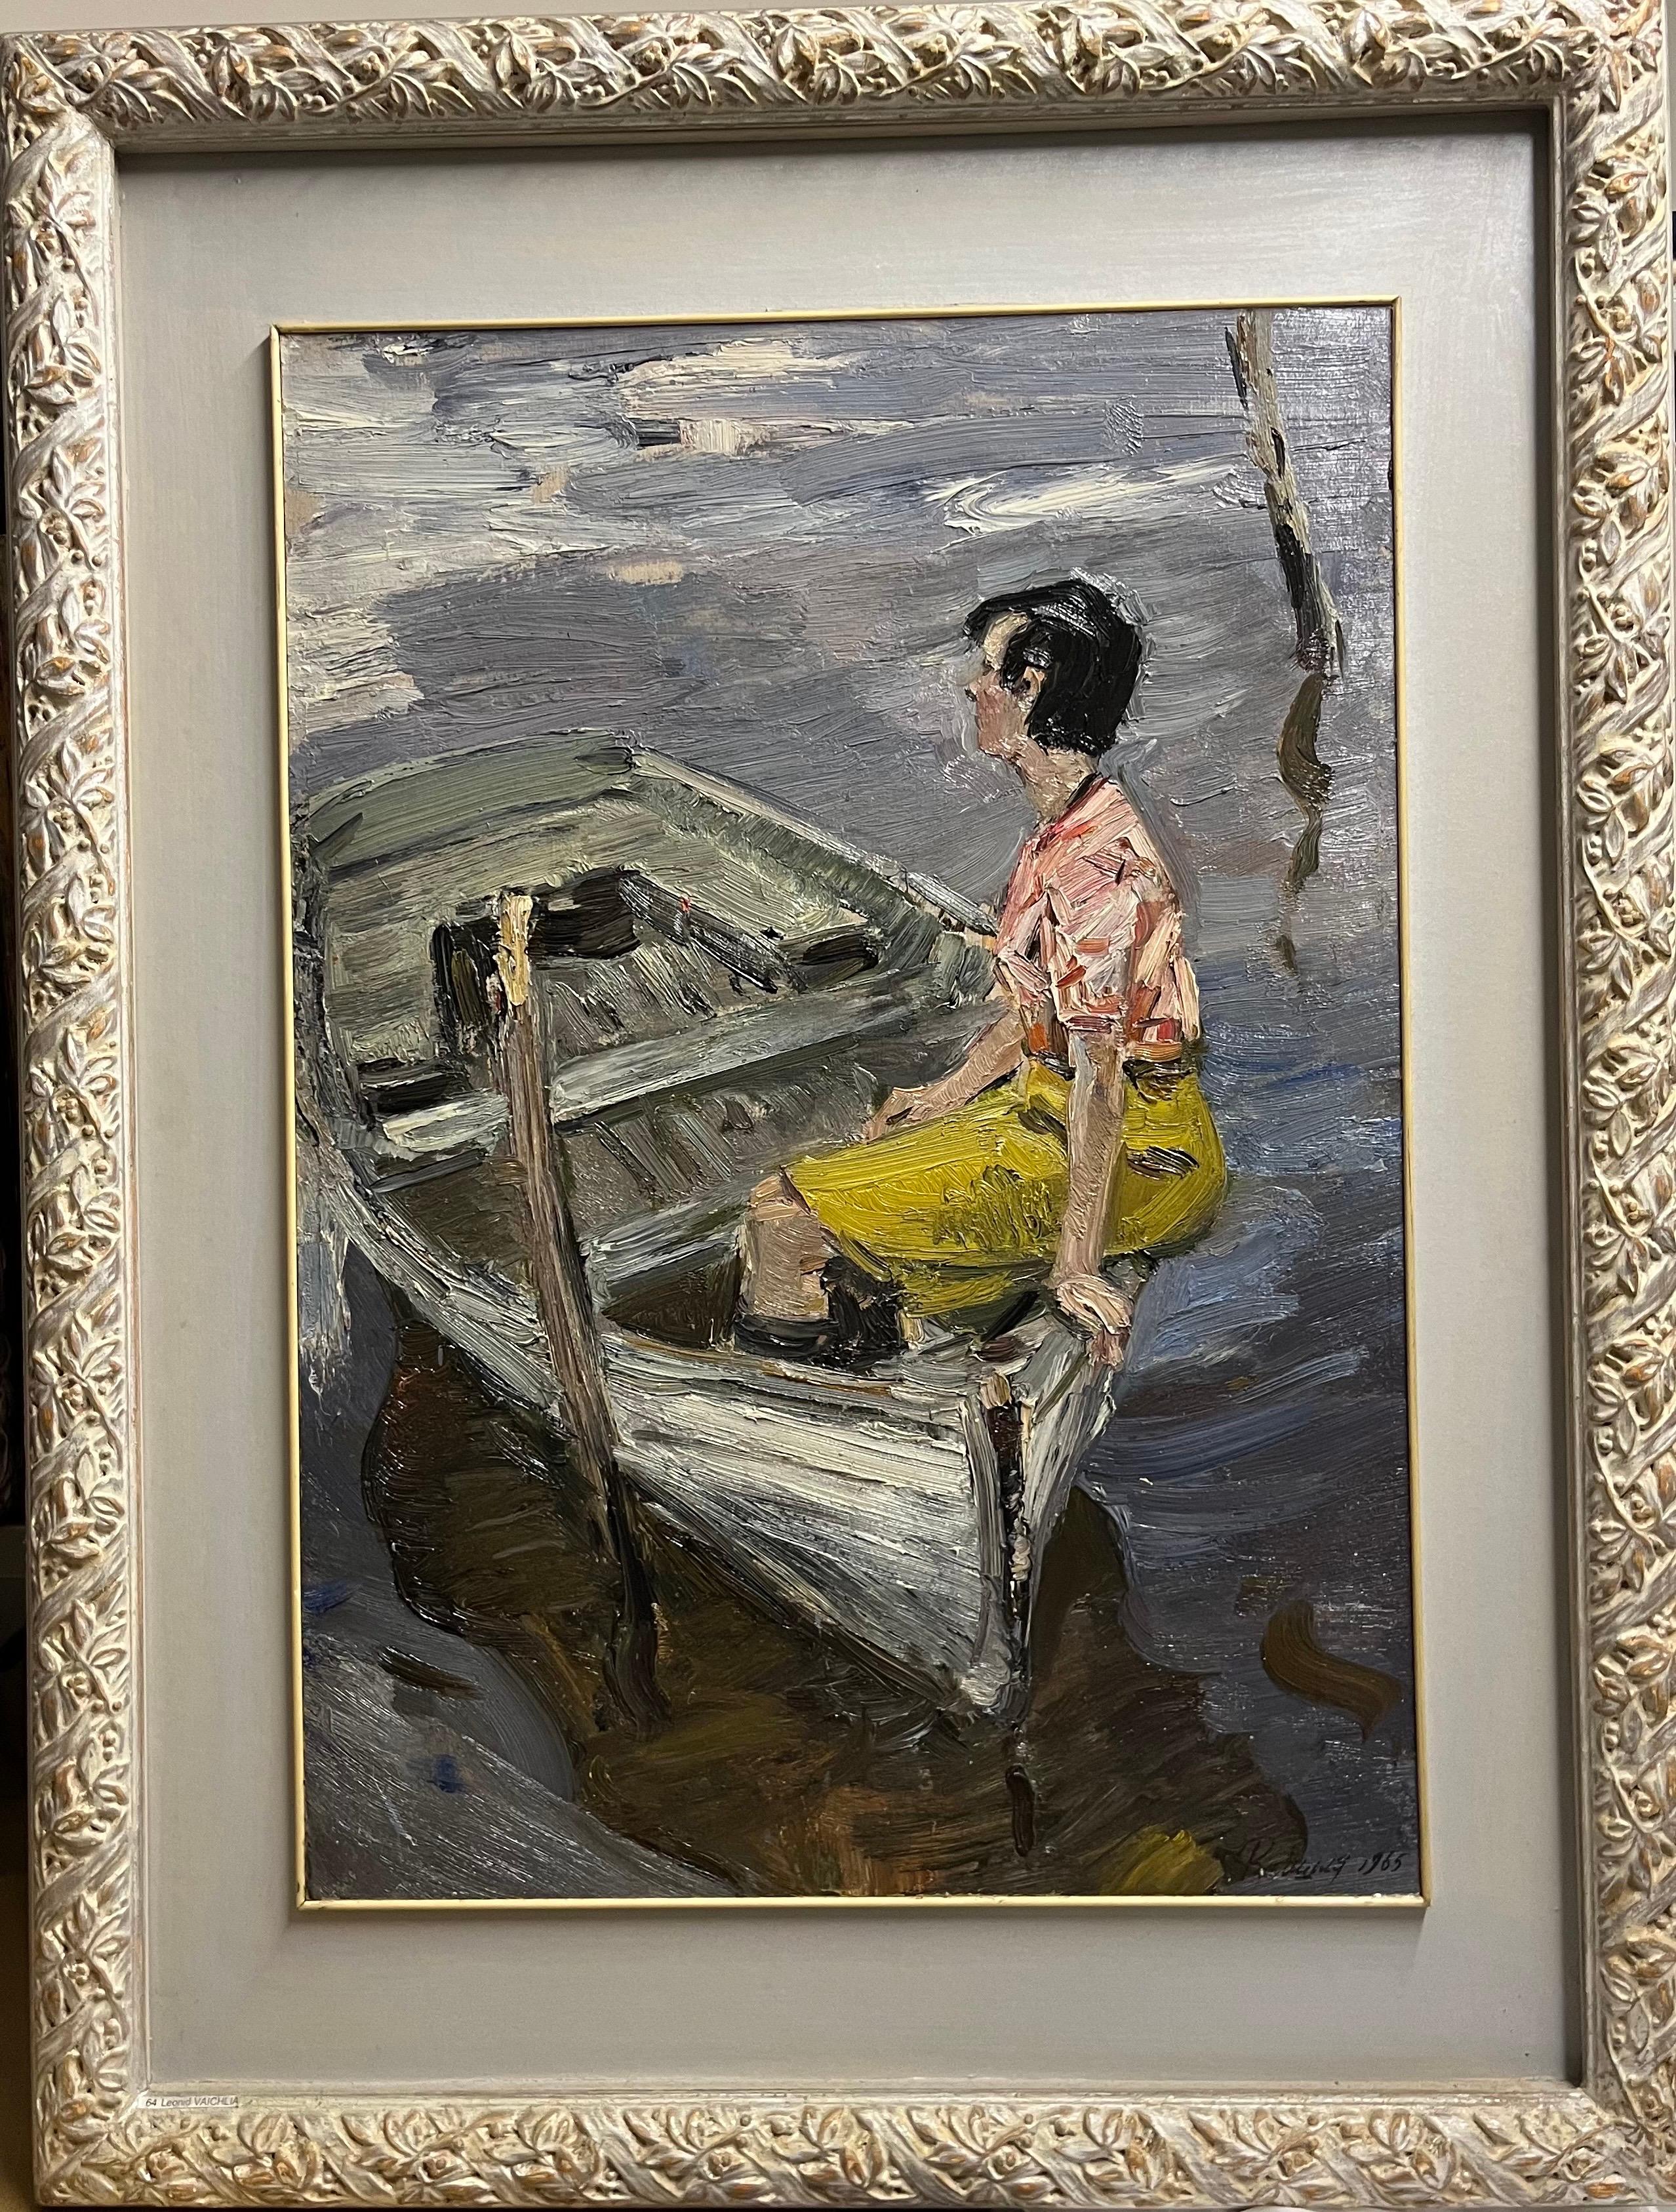 Leonid VAICHILIA Portrait Painting - "Donna sul fiume" Olio su tavola cm. 50 x 67  1965